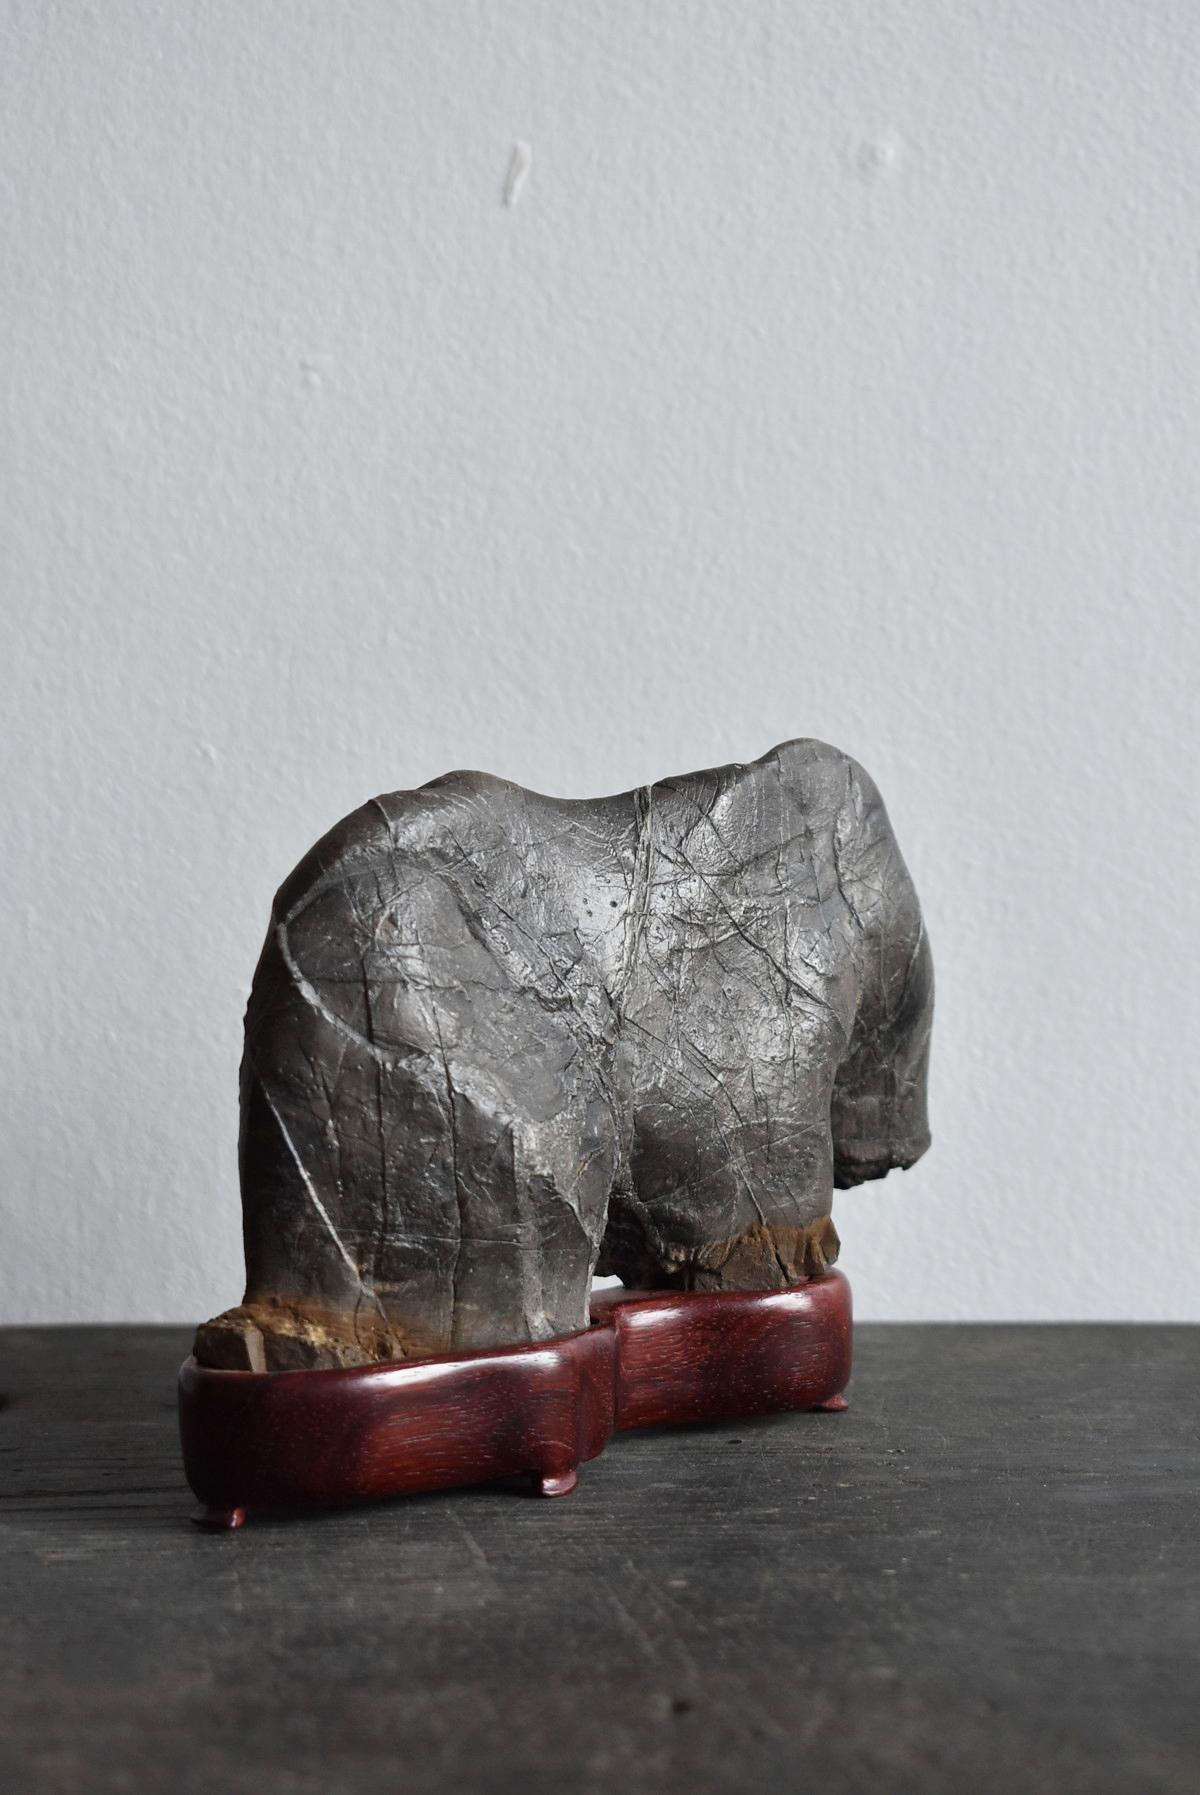 20th Century Small Japanese Old Stone / Elephant-Shaped Ornamental Stone / Scholar's Objects